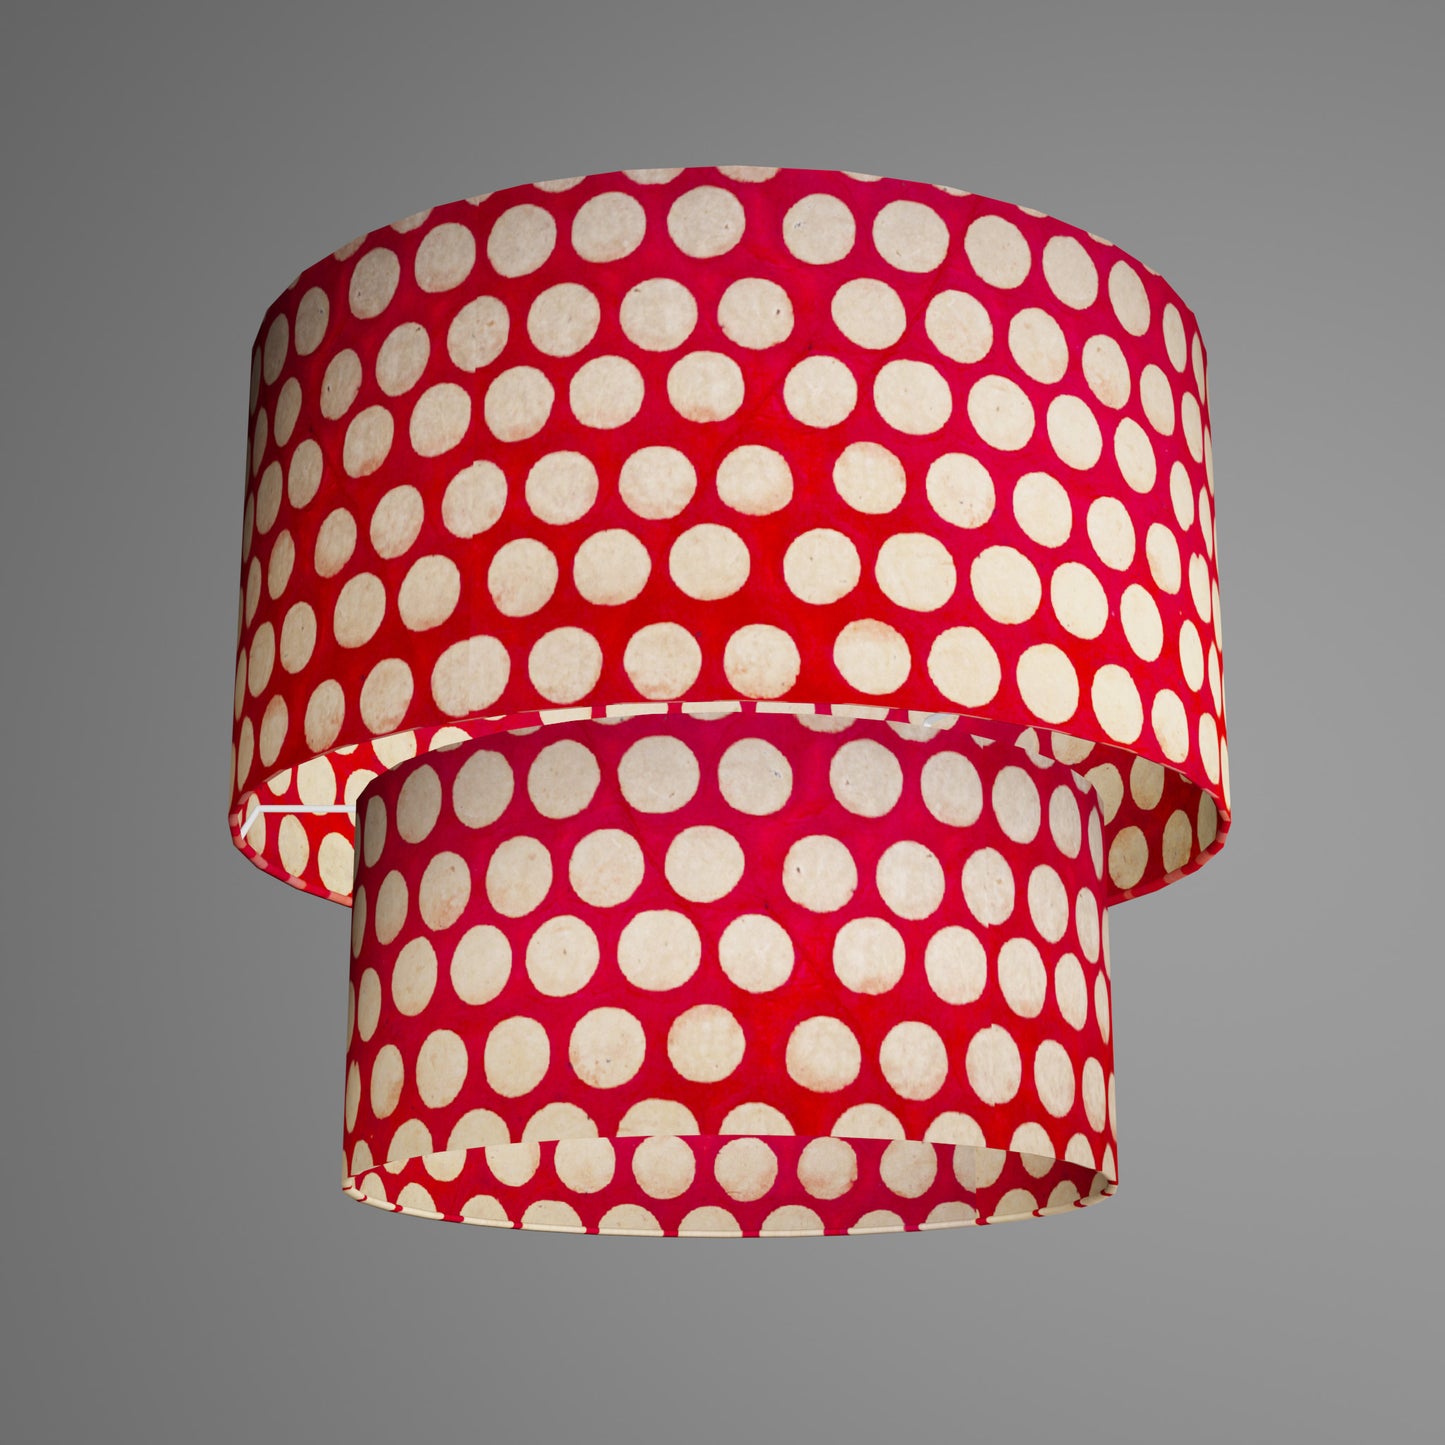 2 Tier Lamp Shade - P84 - Batik Dots on Red, 40cm x 20cm & 30cm x 15cm